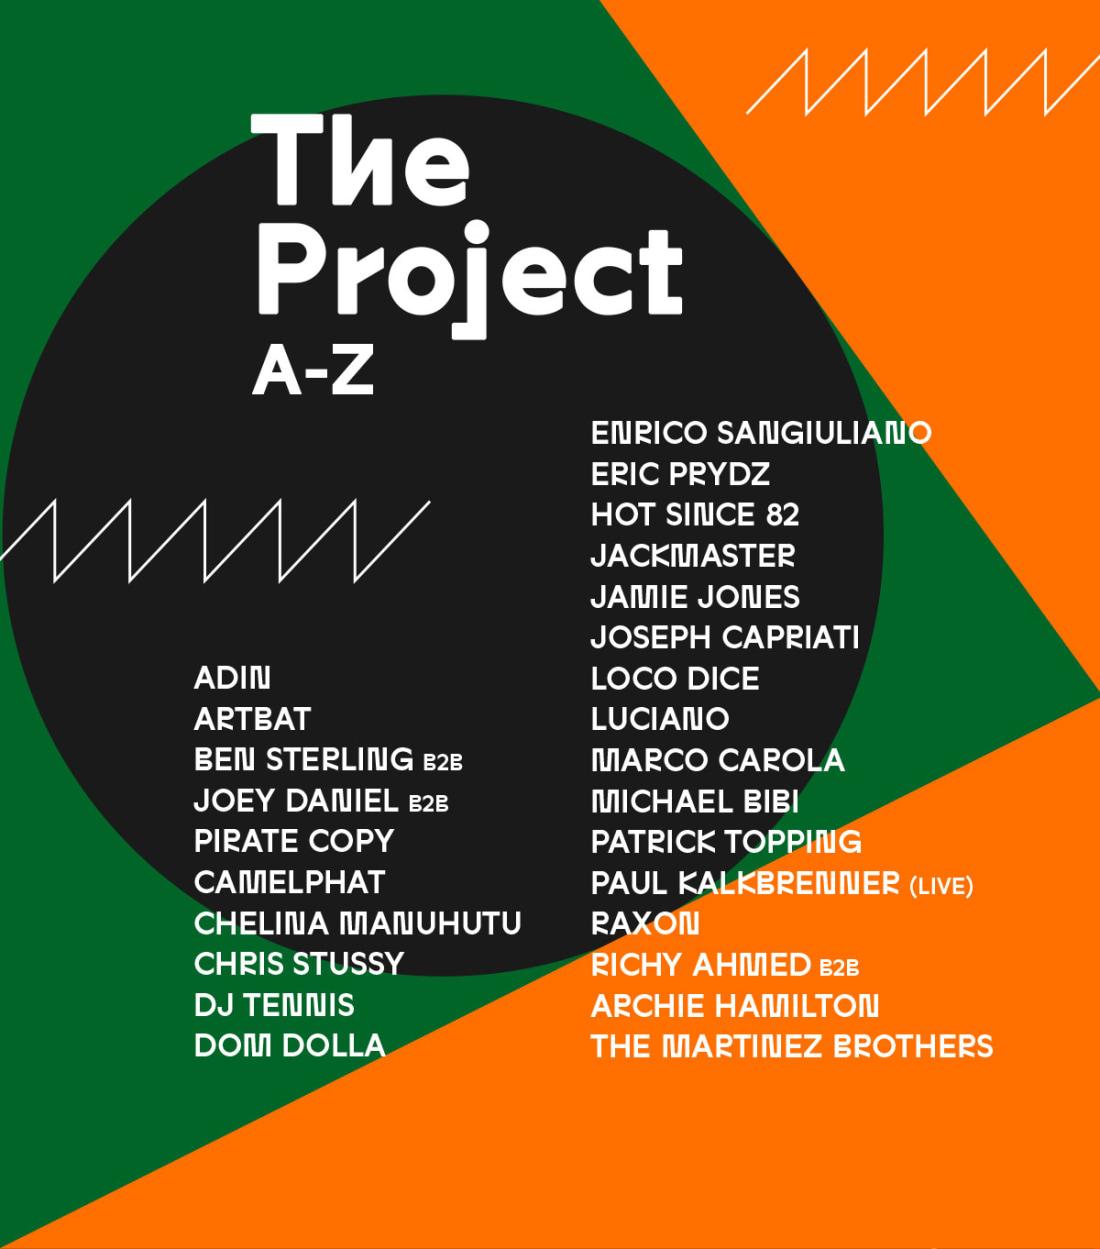 Secret Project Festival Portugal